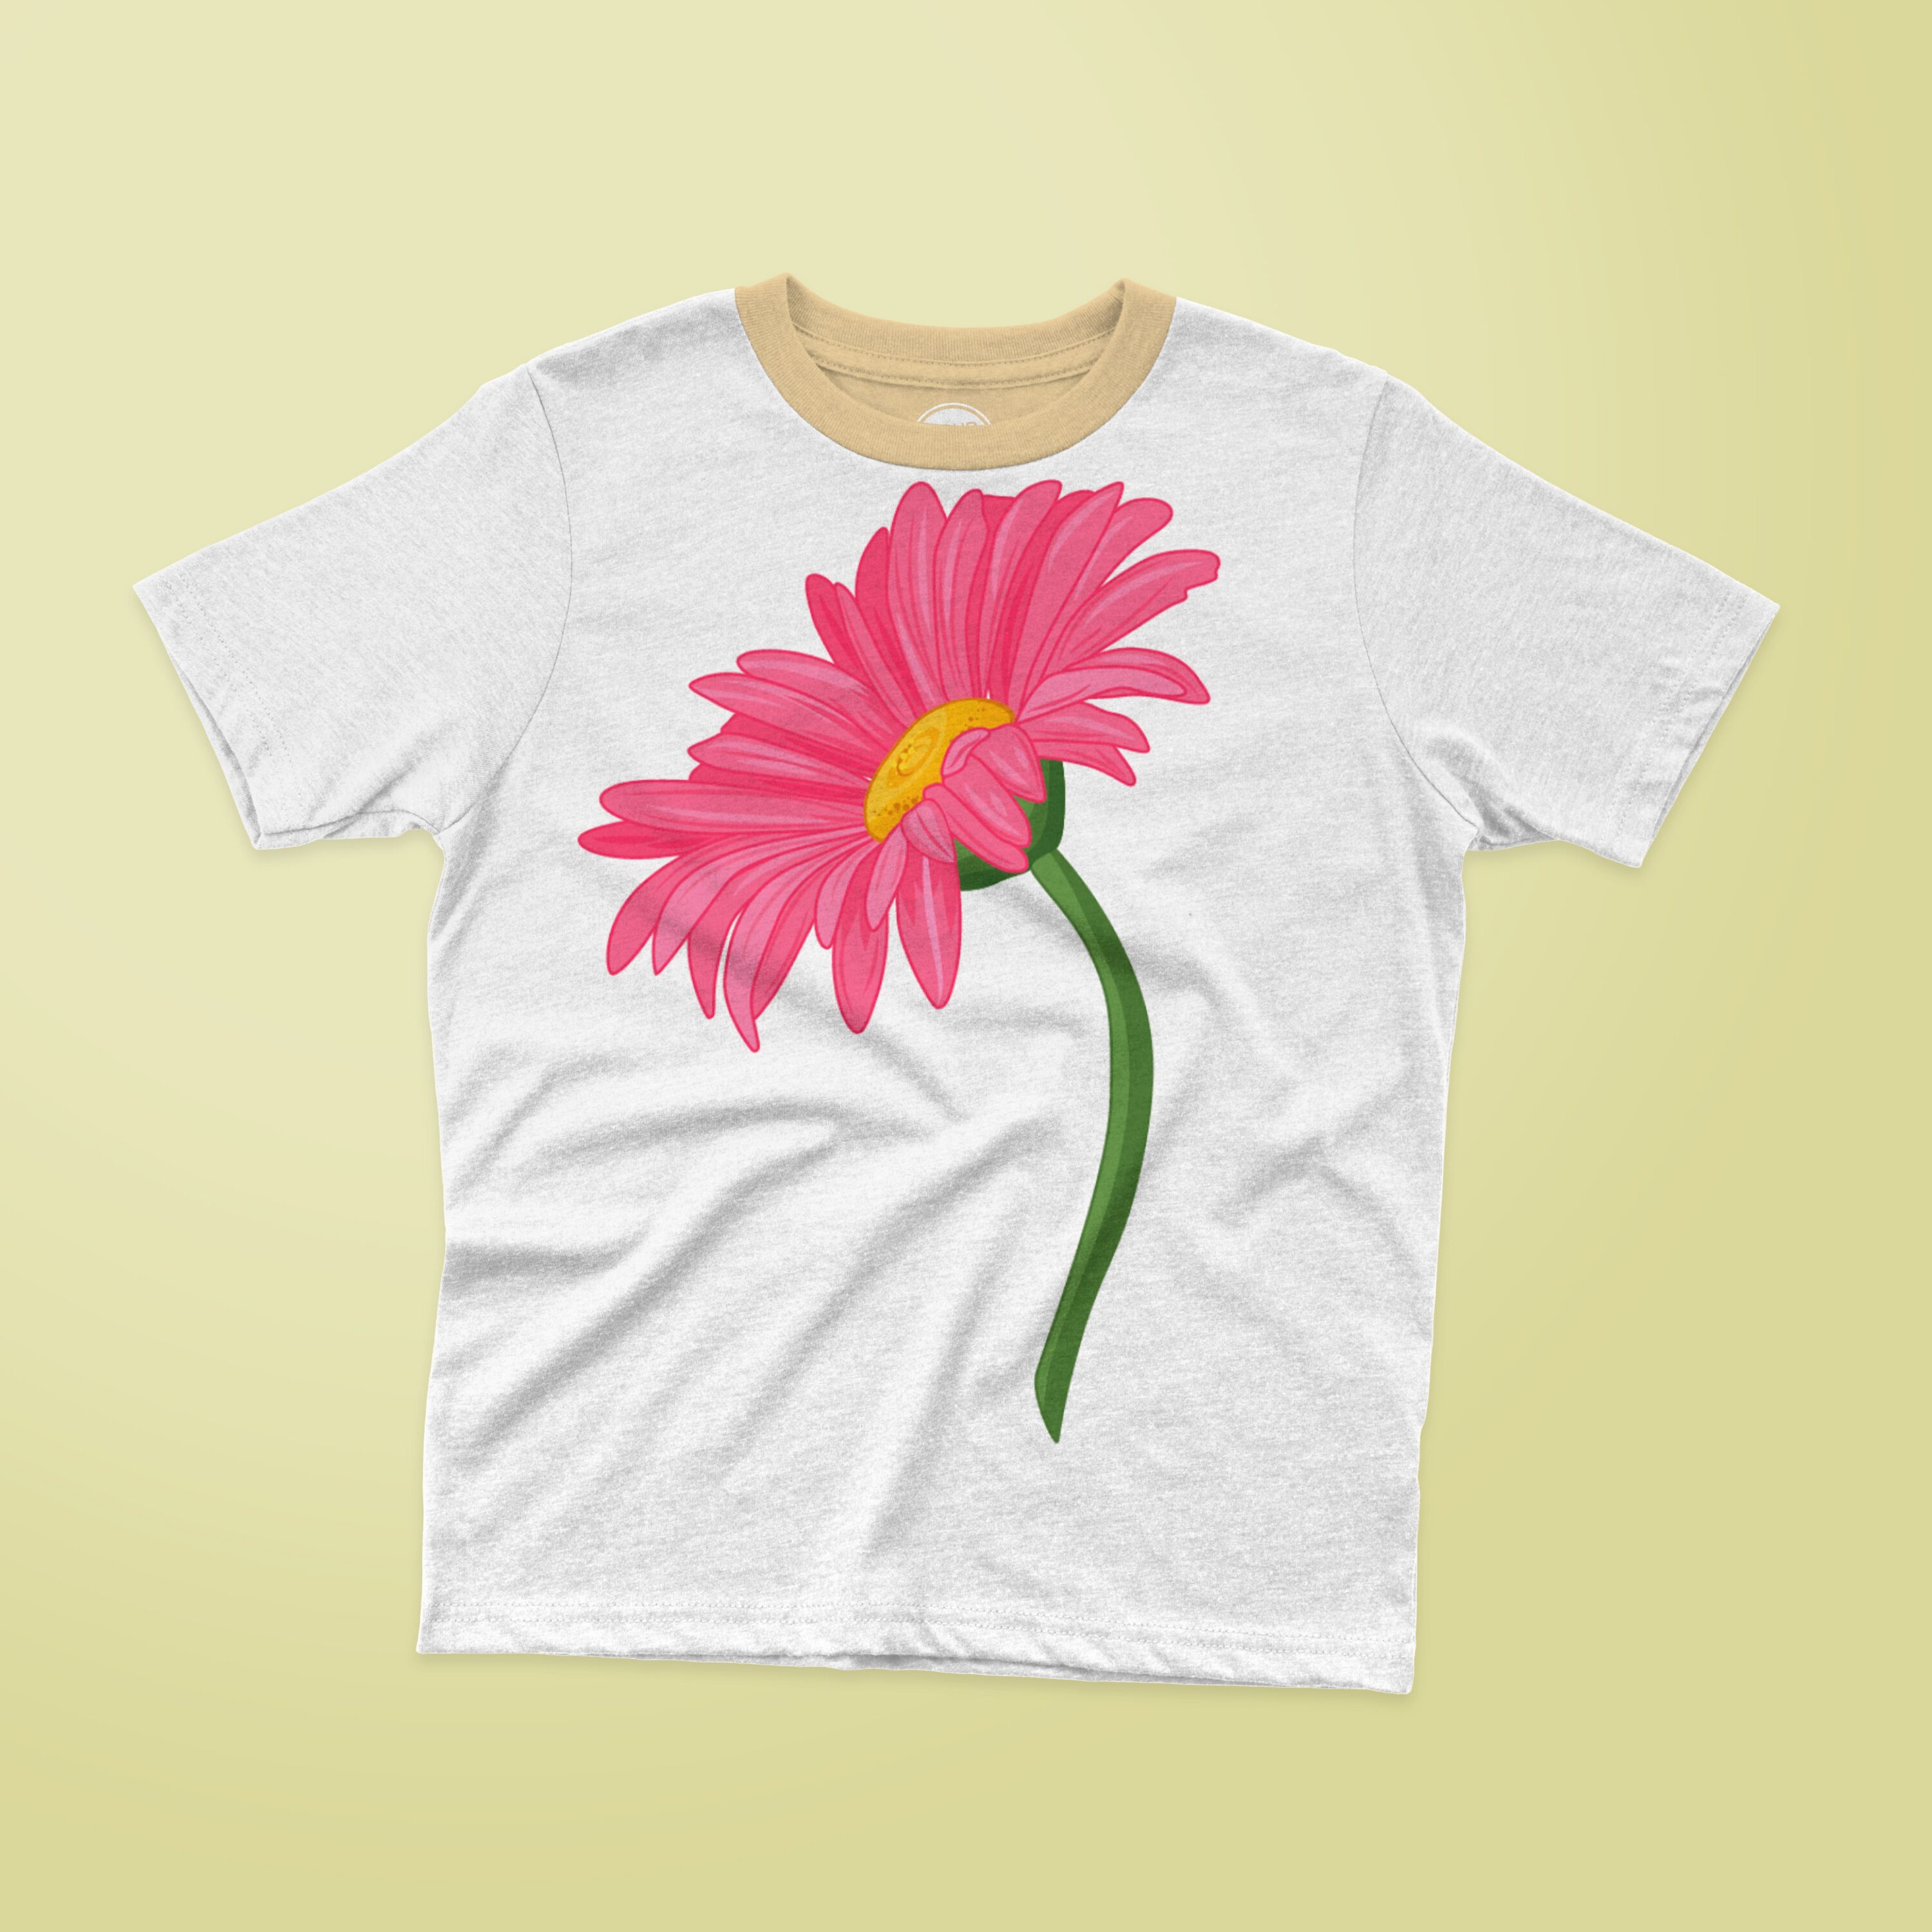 Pink gerber daisy on the t-shirt design.